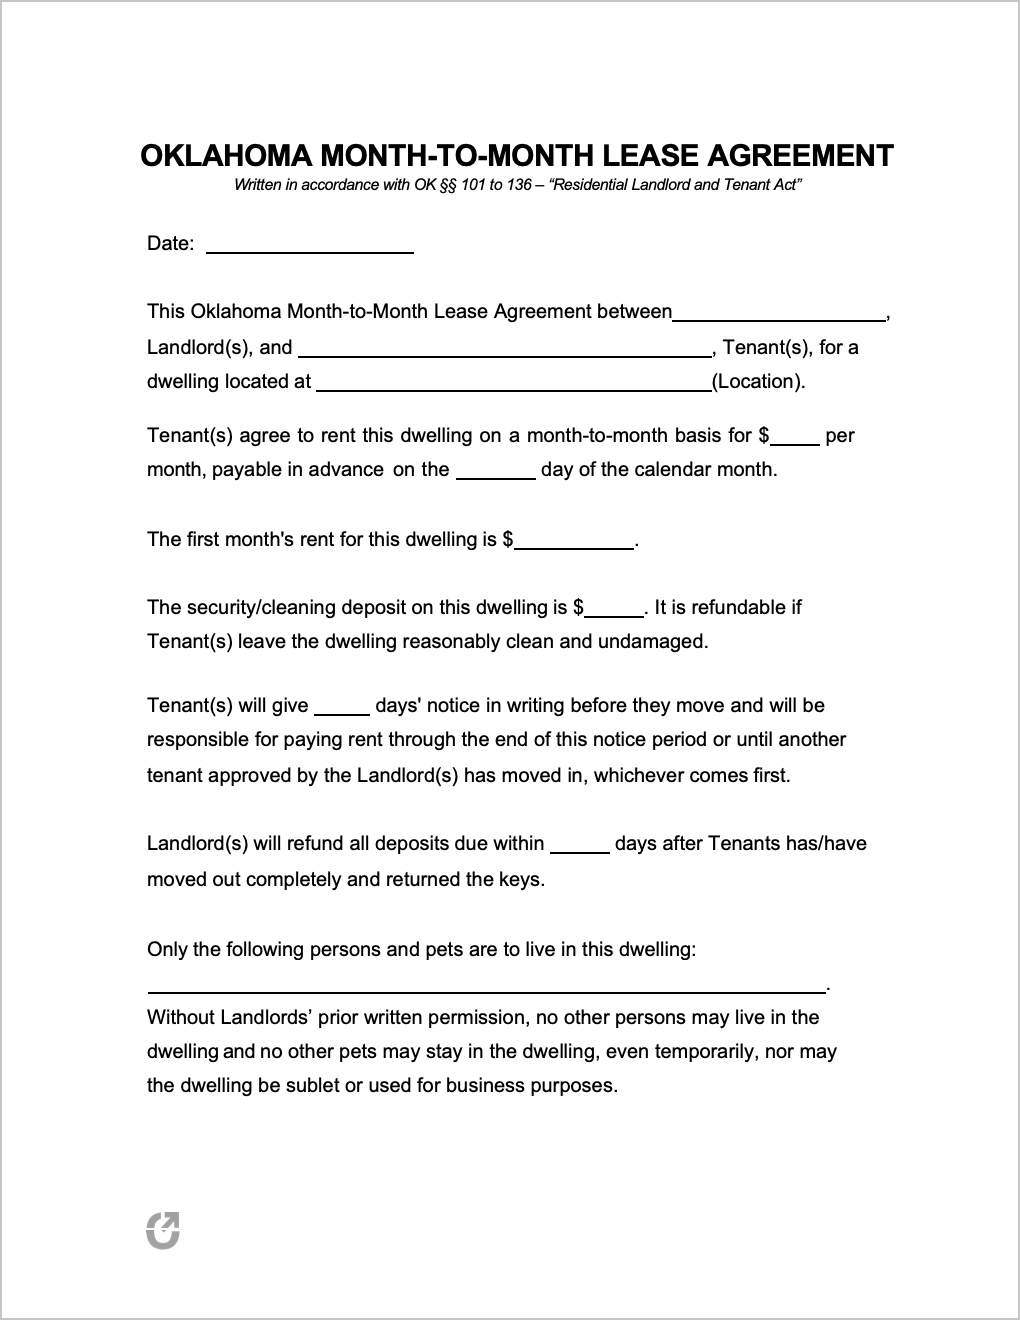 oklahoma-rental-agreement-template